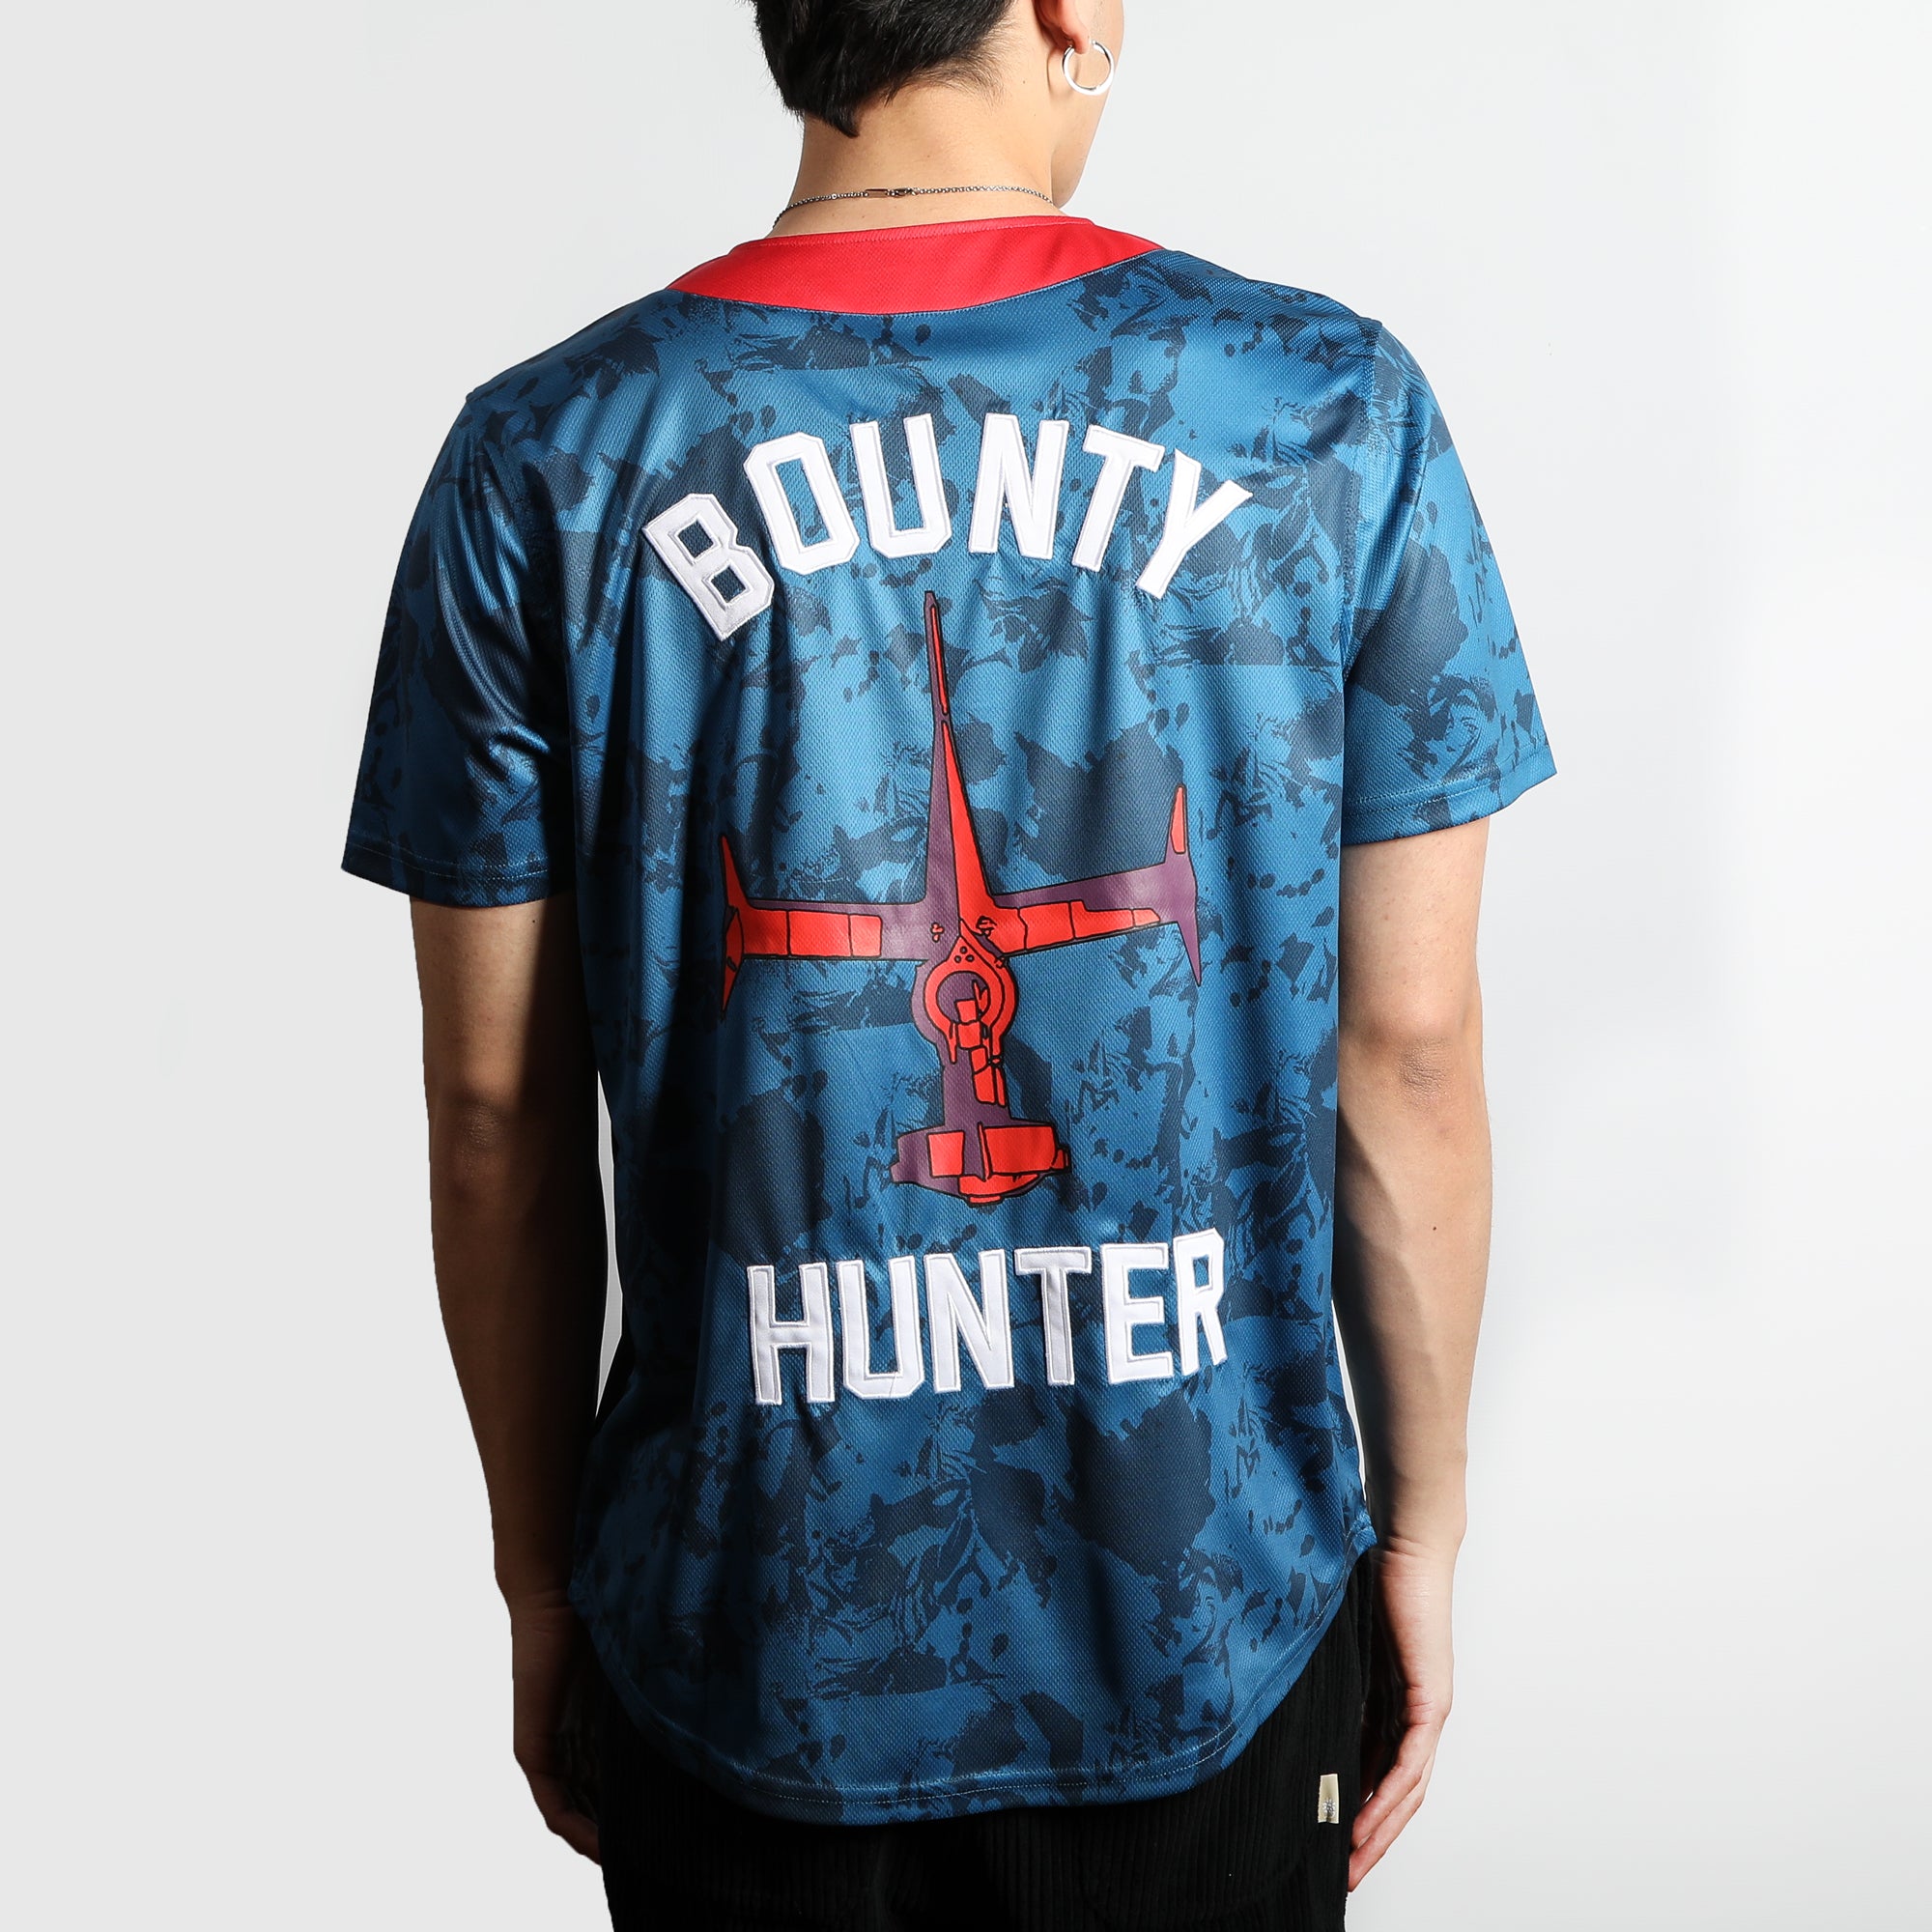 Bounty Hunter Baseball Jersey